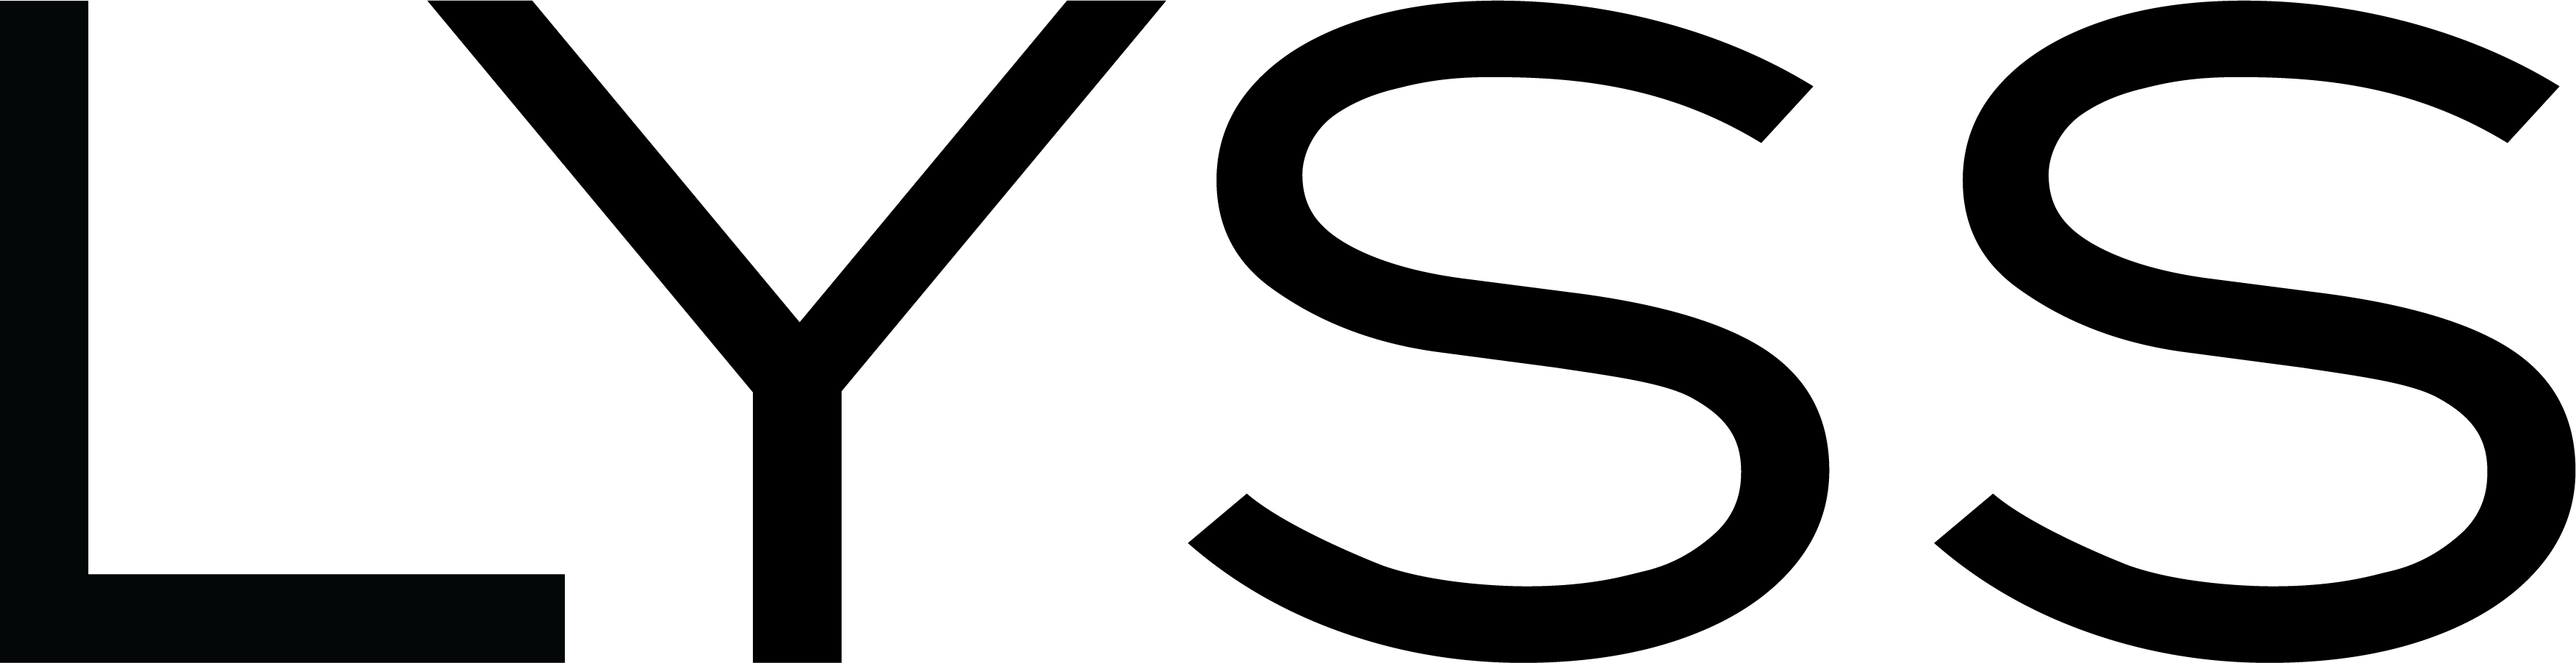 LYSS logo černá